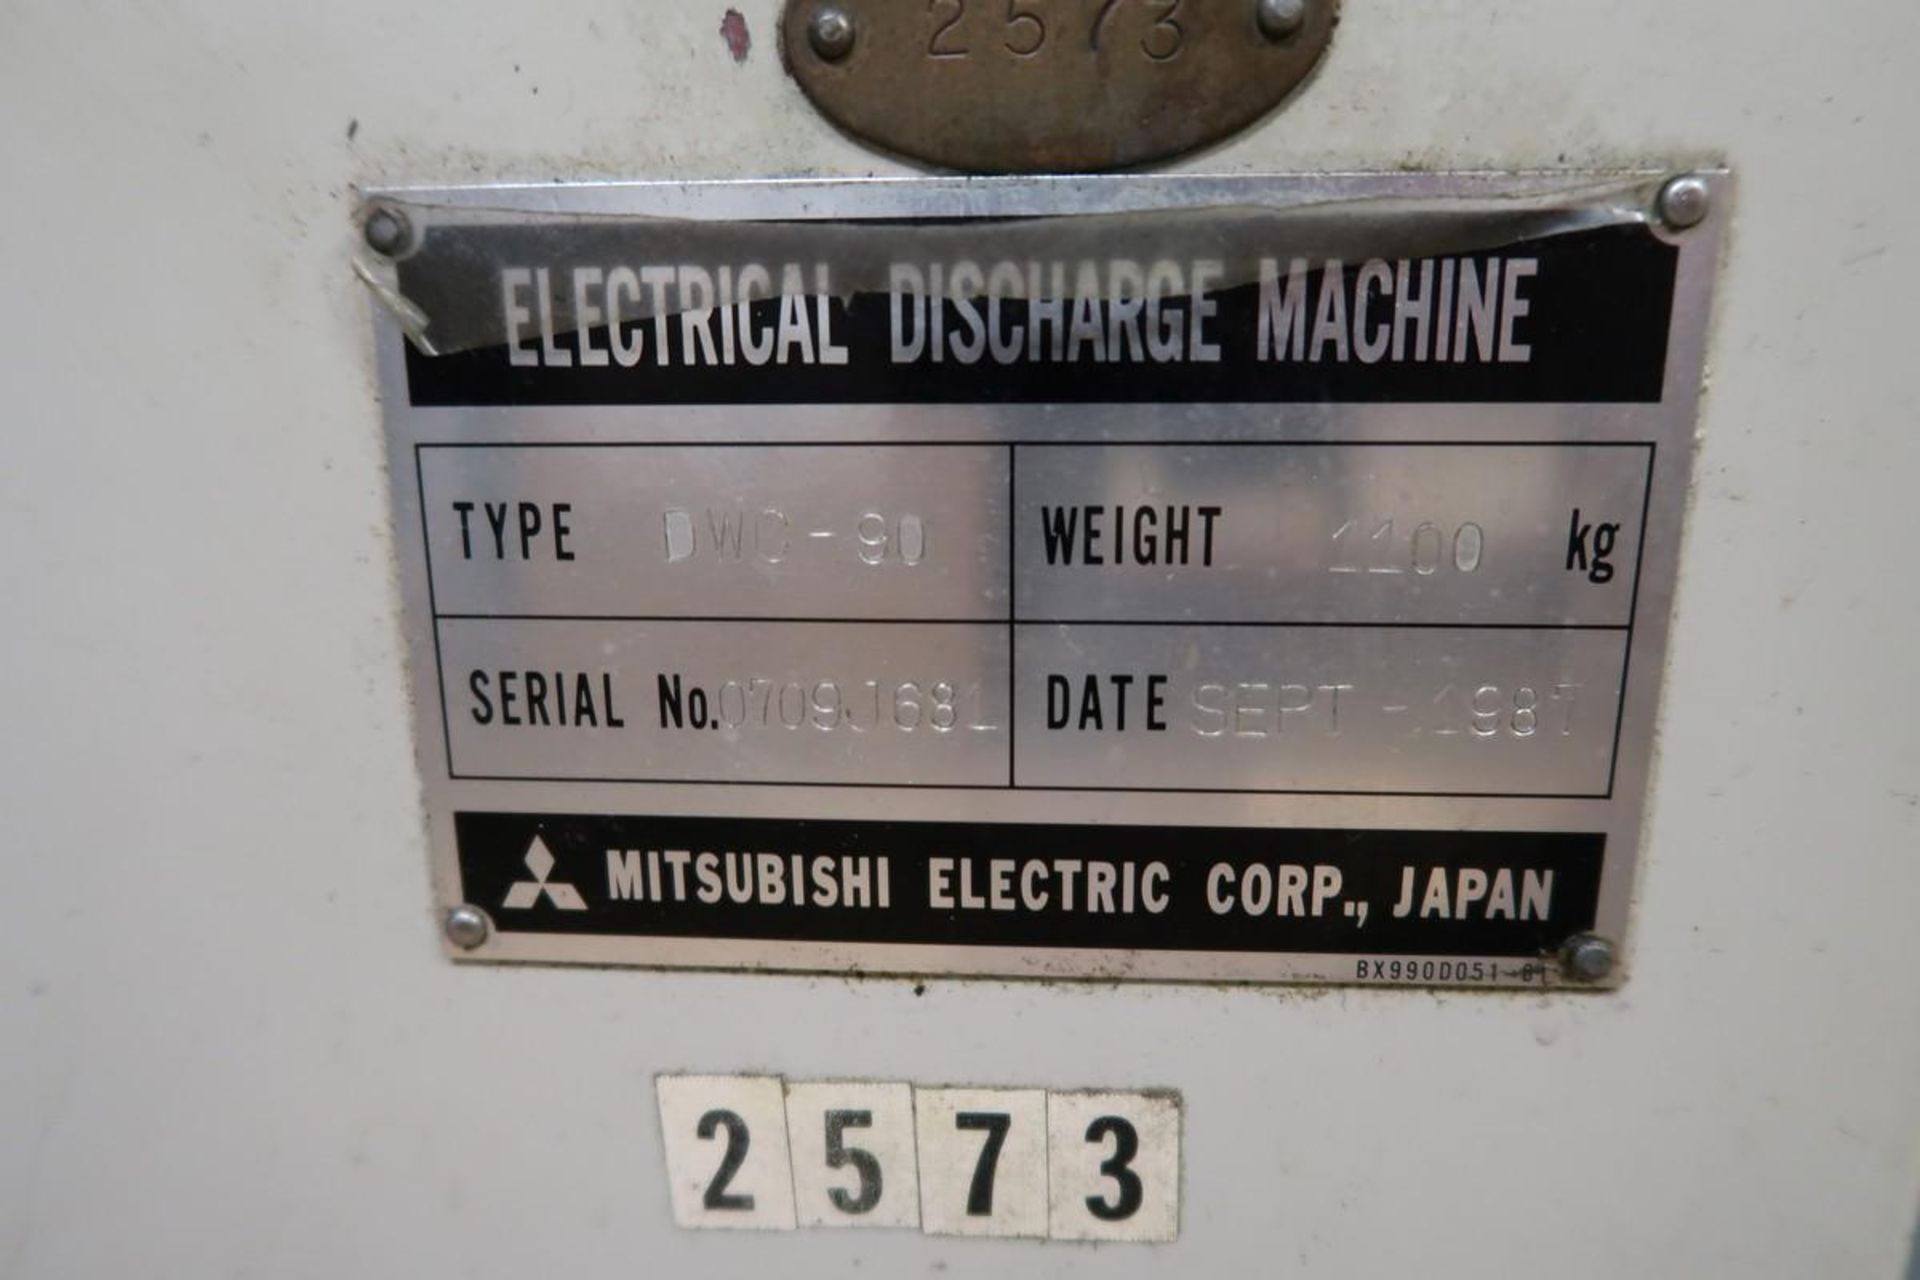 1987 Mitsubishi DWC-90 Wire Electrical Discharge Machine - Image 7 of 11